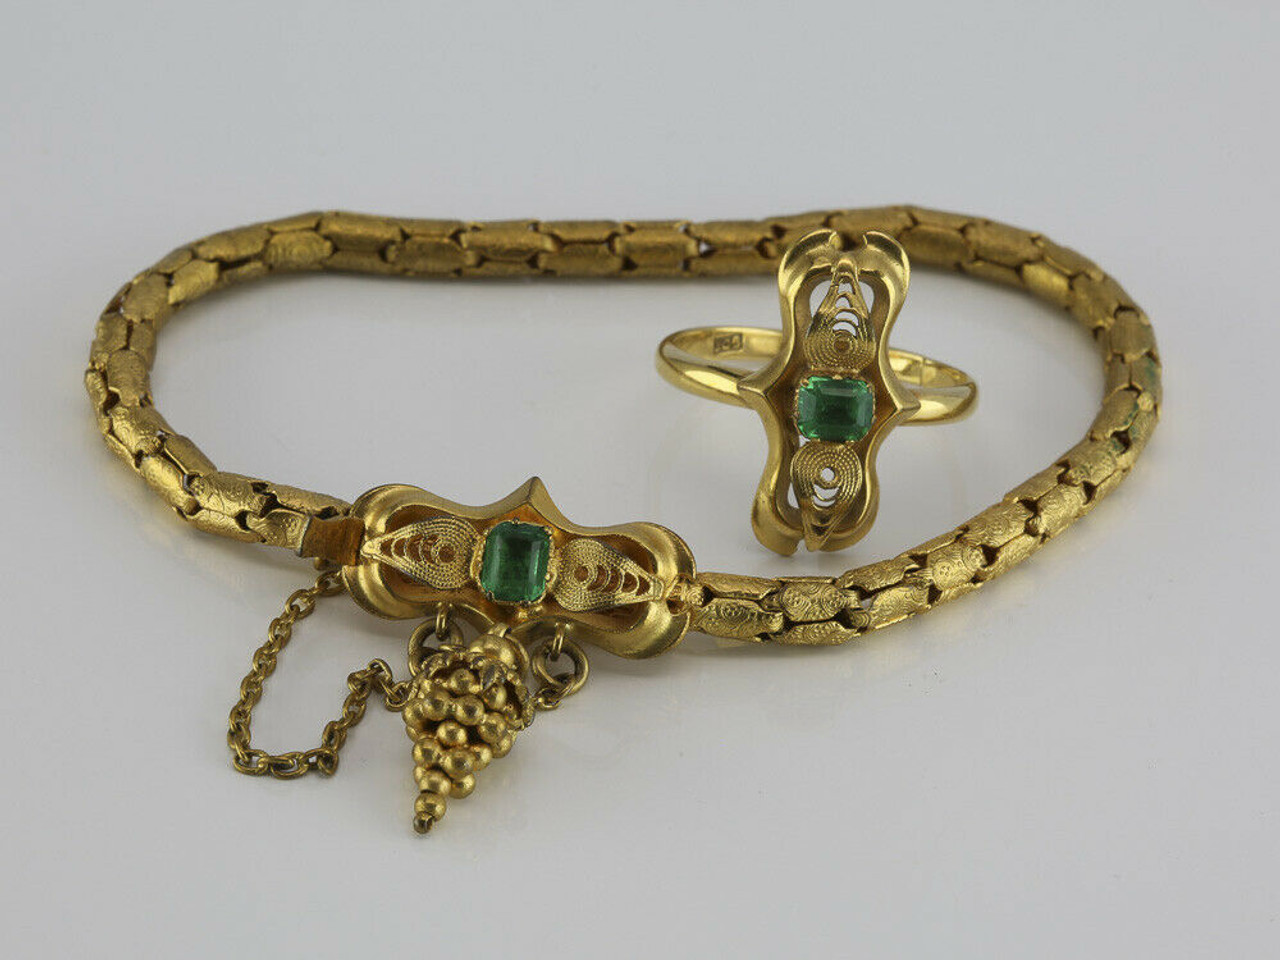 Rare belt bracelet circa 1900 RG/GG 585/000 (Russian 56 …